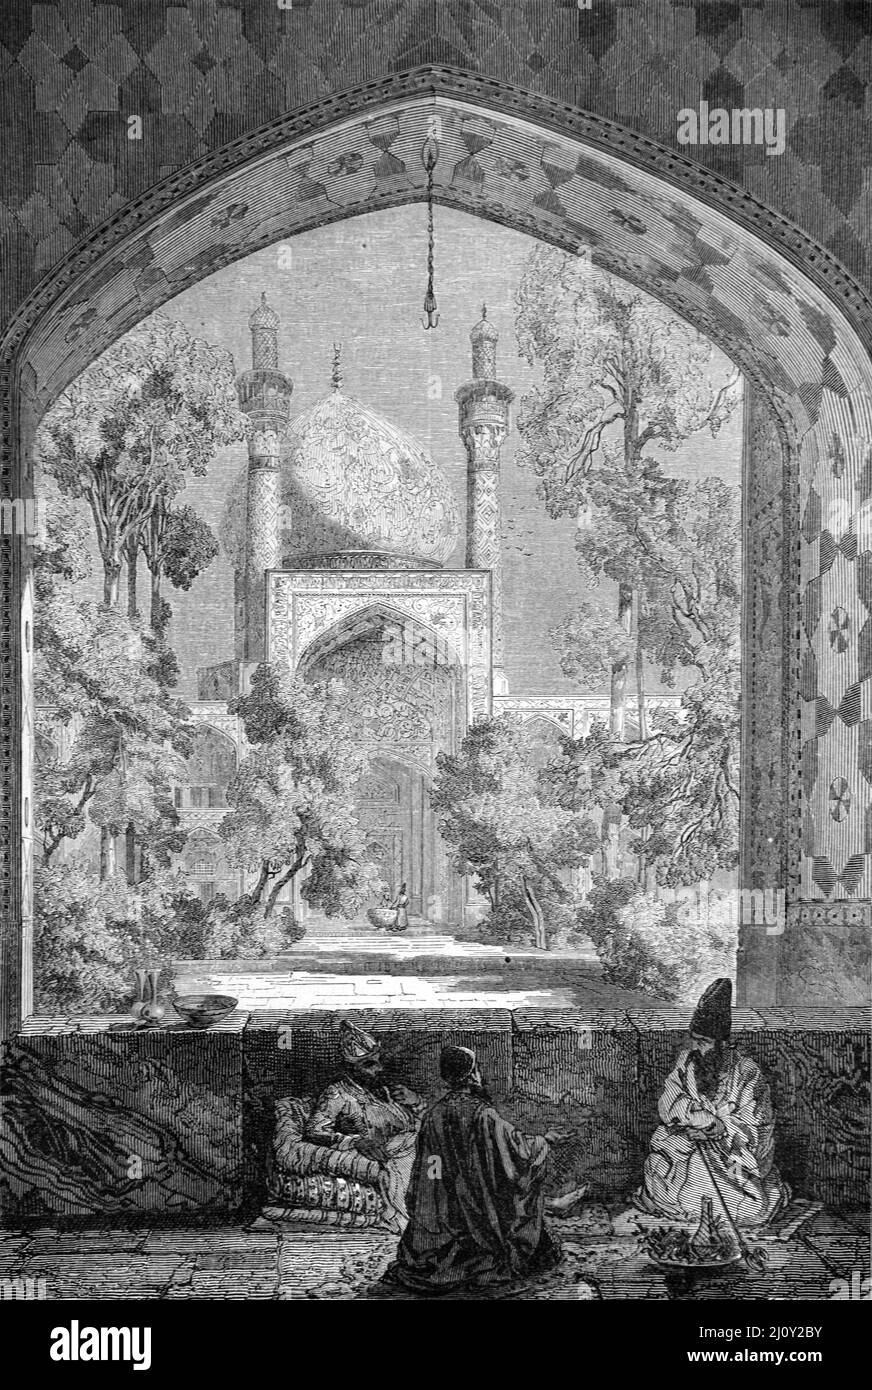 Madrasa, Koranschule oder Islamische Schule in Isfahan, Persien oder Iran. Vintage Illustration oder Gravur 1860. Stockfoto